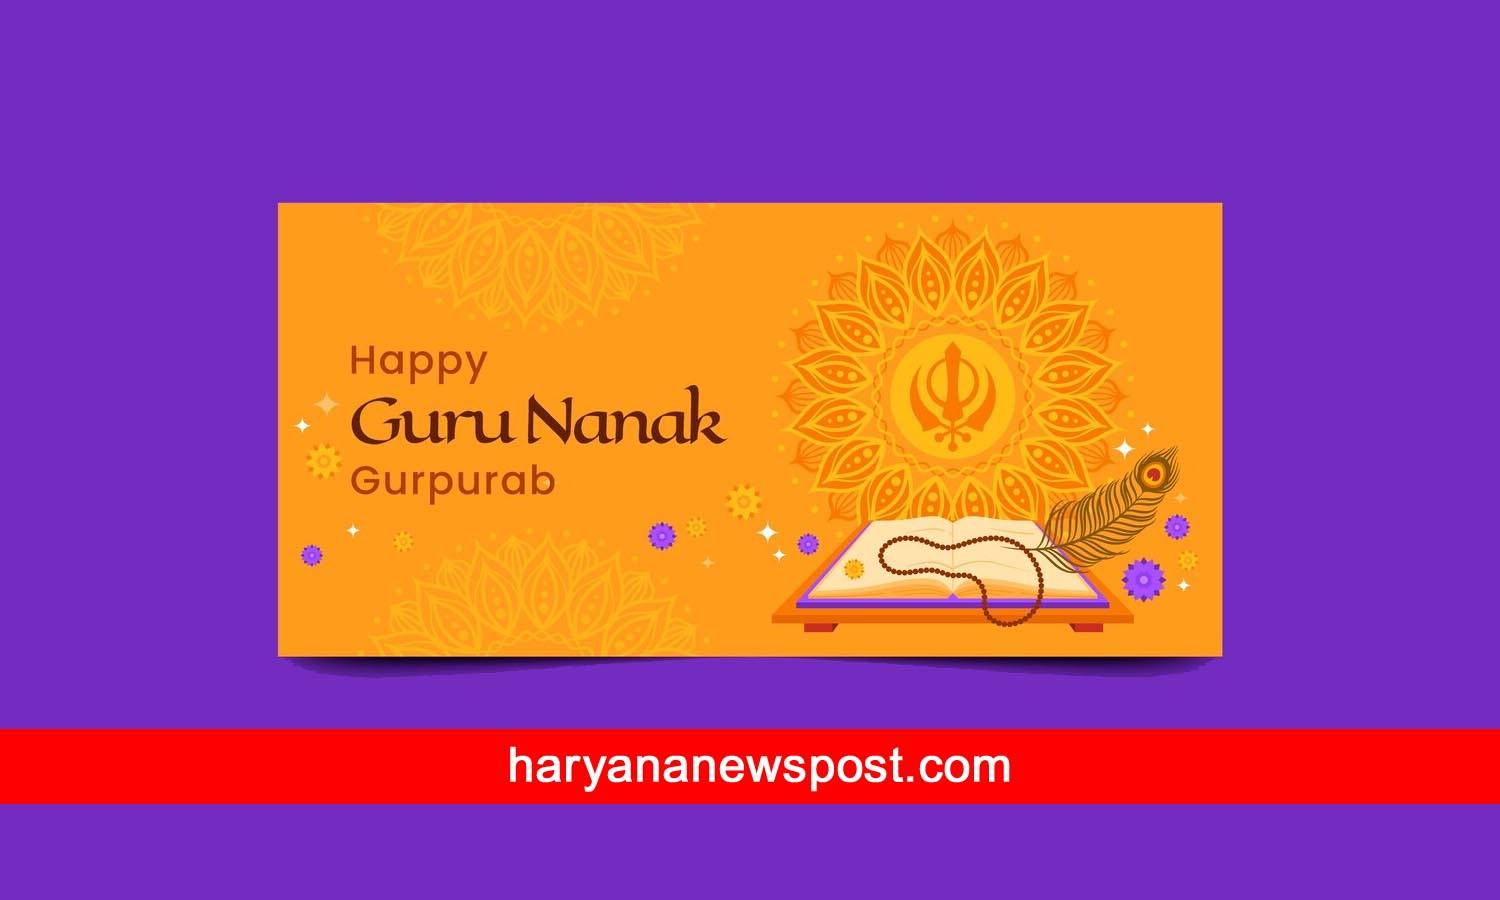 Guru Nanak Blessings Quotes, Guru Nanak Wishes